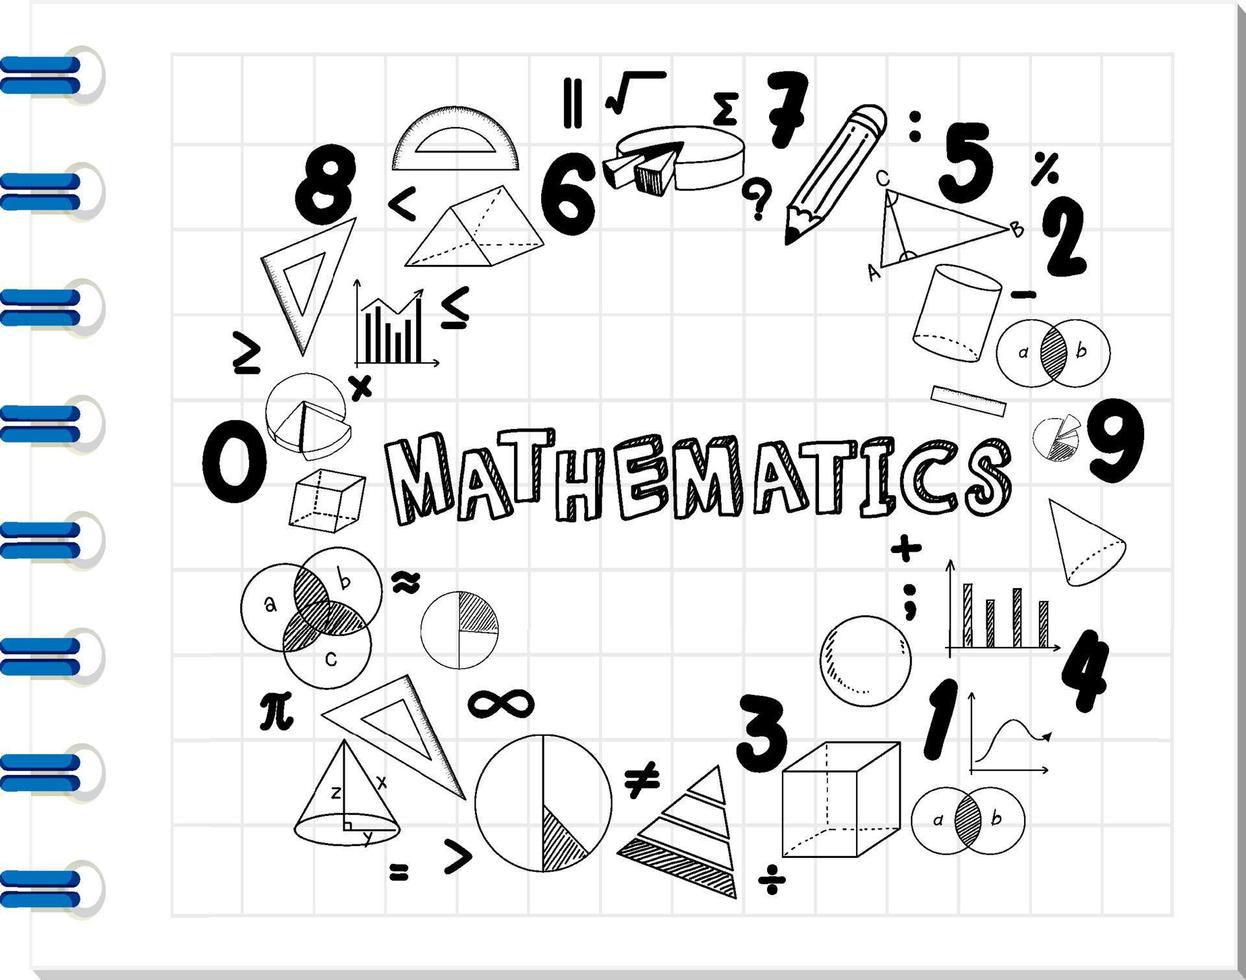 Doodle math formula with Mathematics font on notebook vector